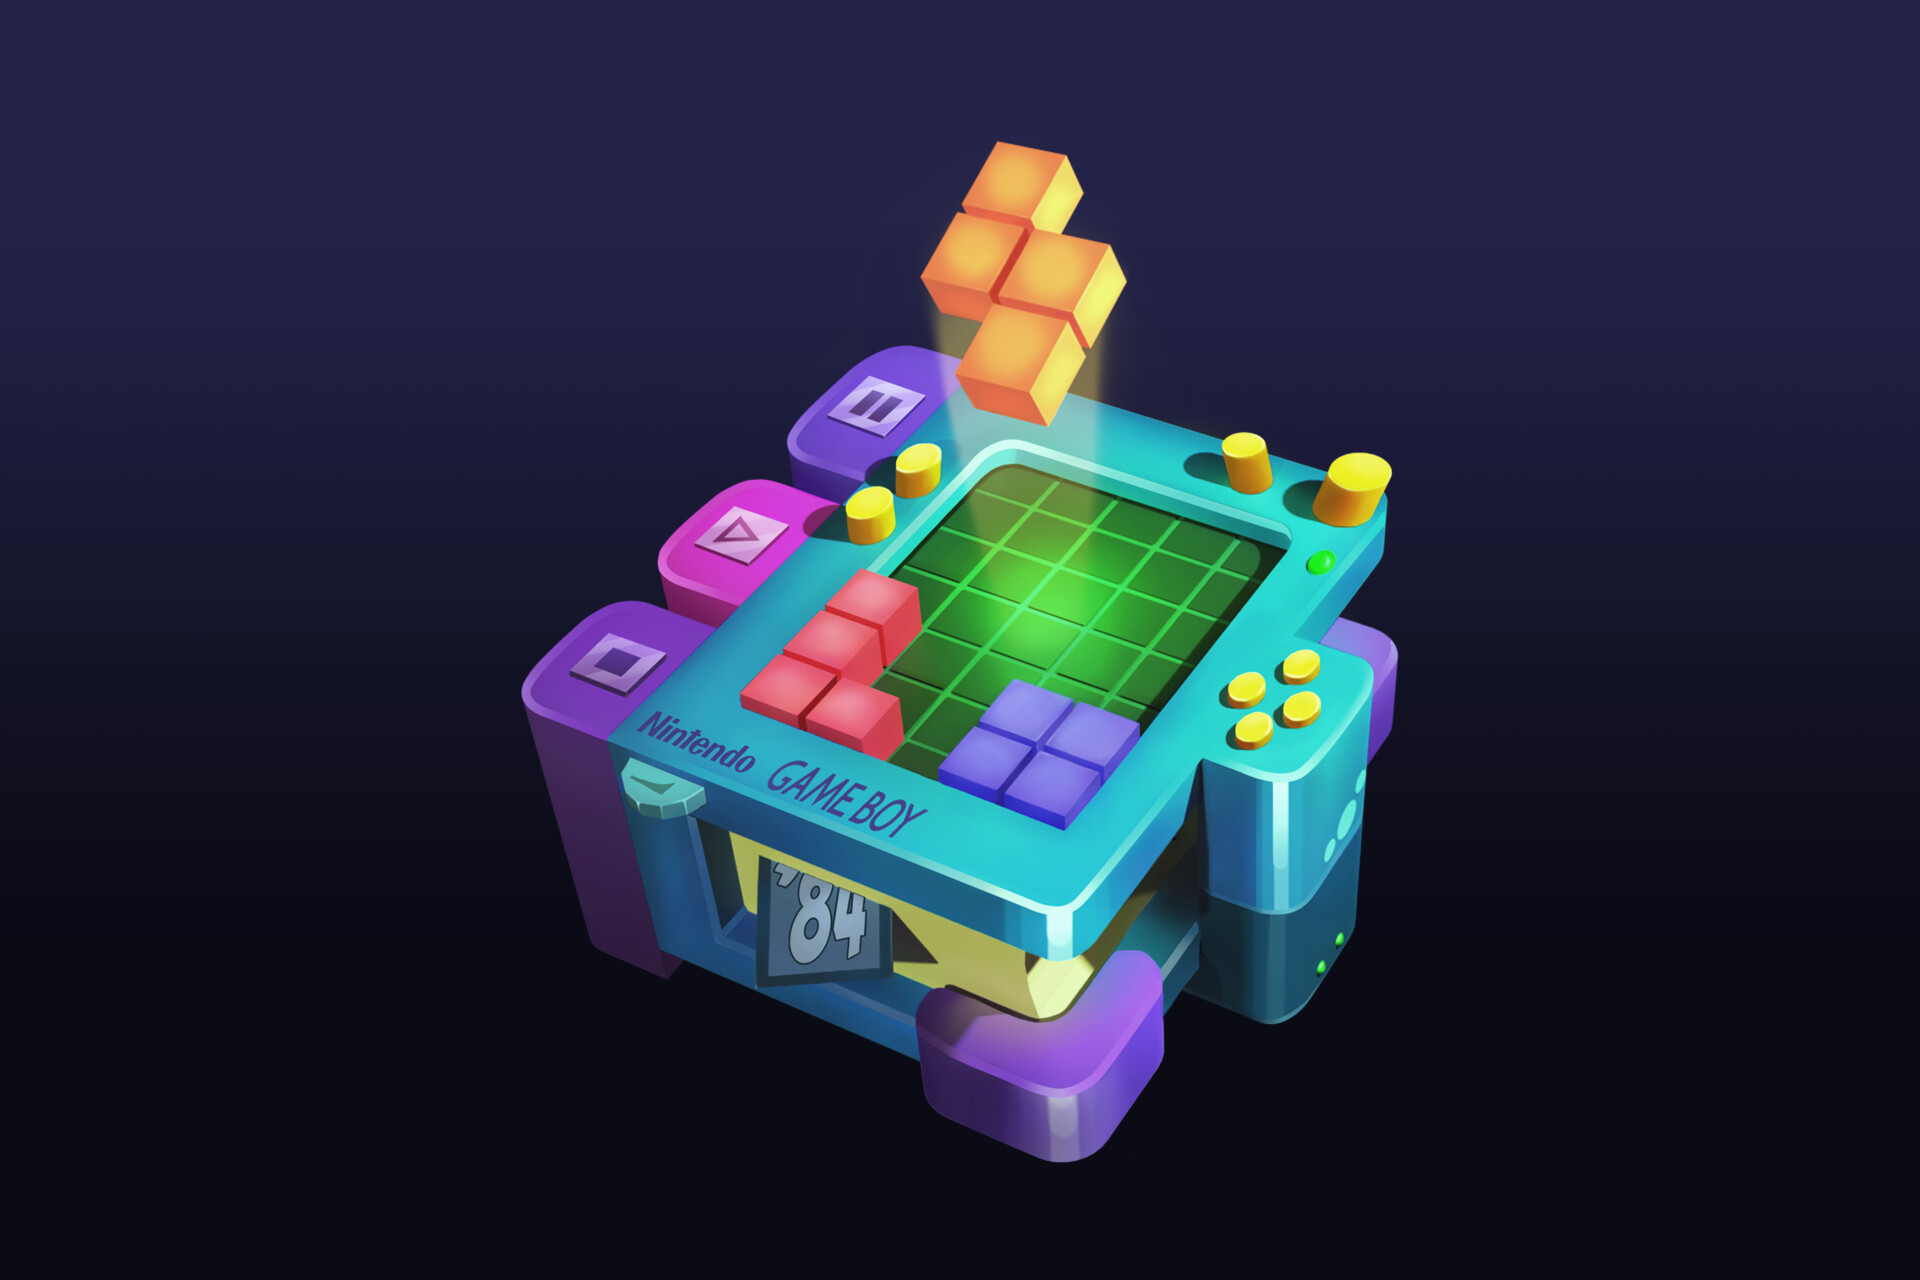 ArtStation - Guide to the game Tetris, concept art